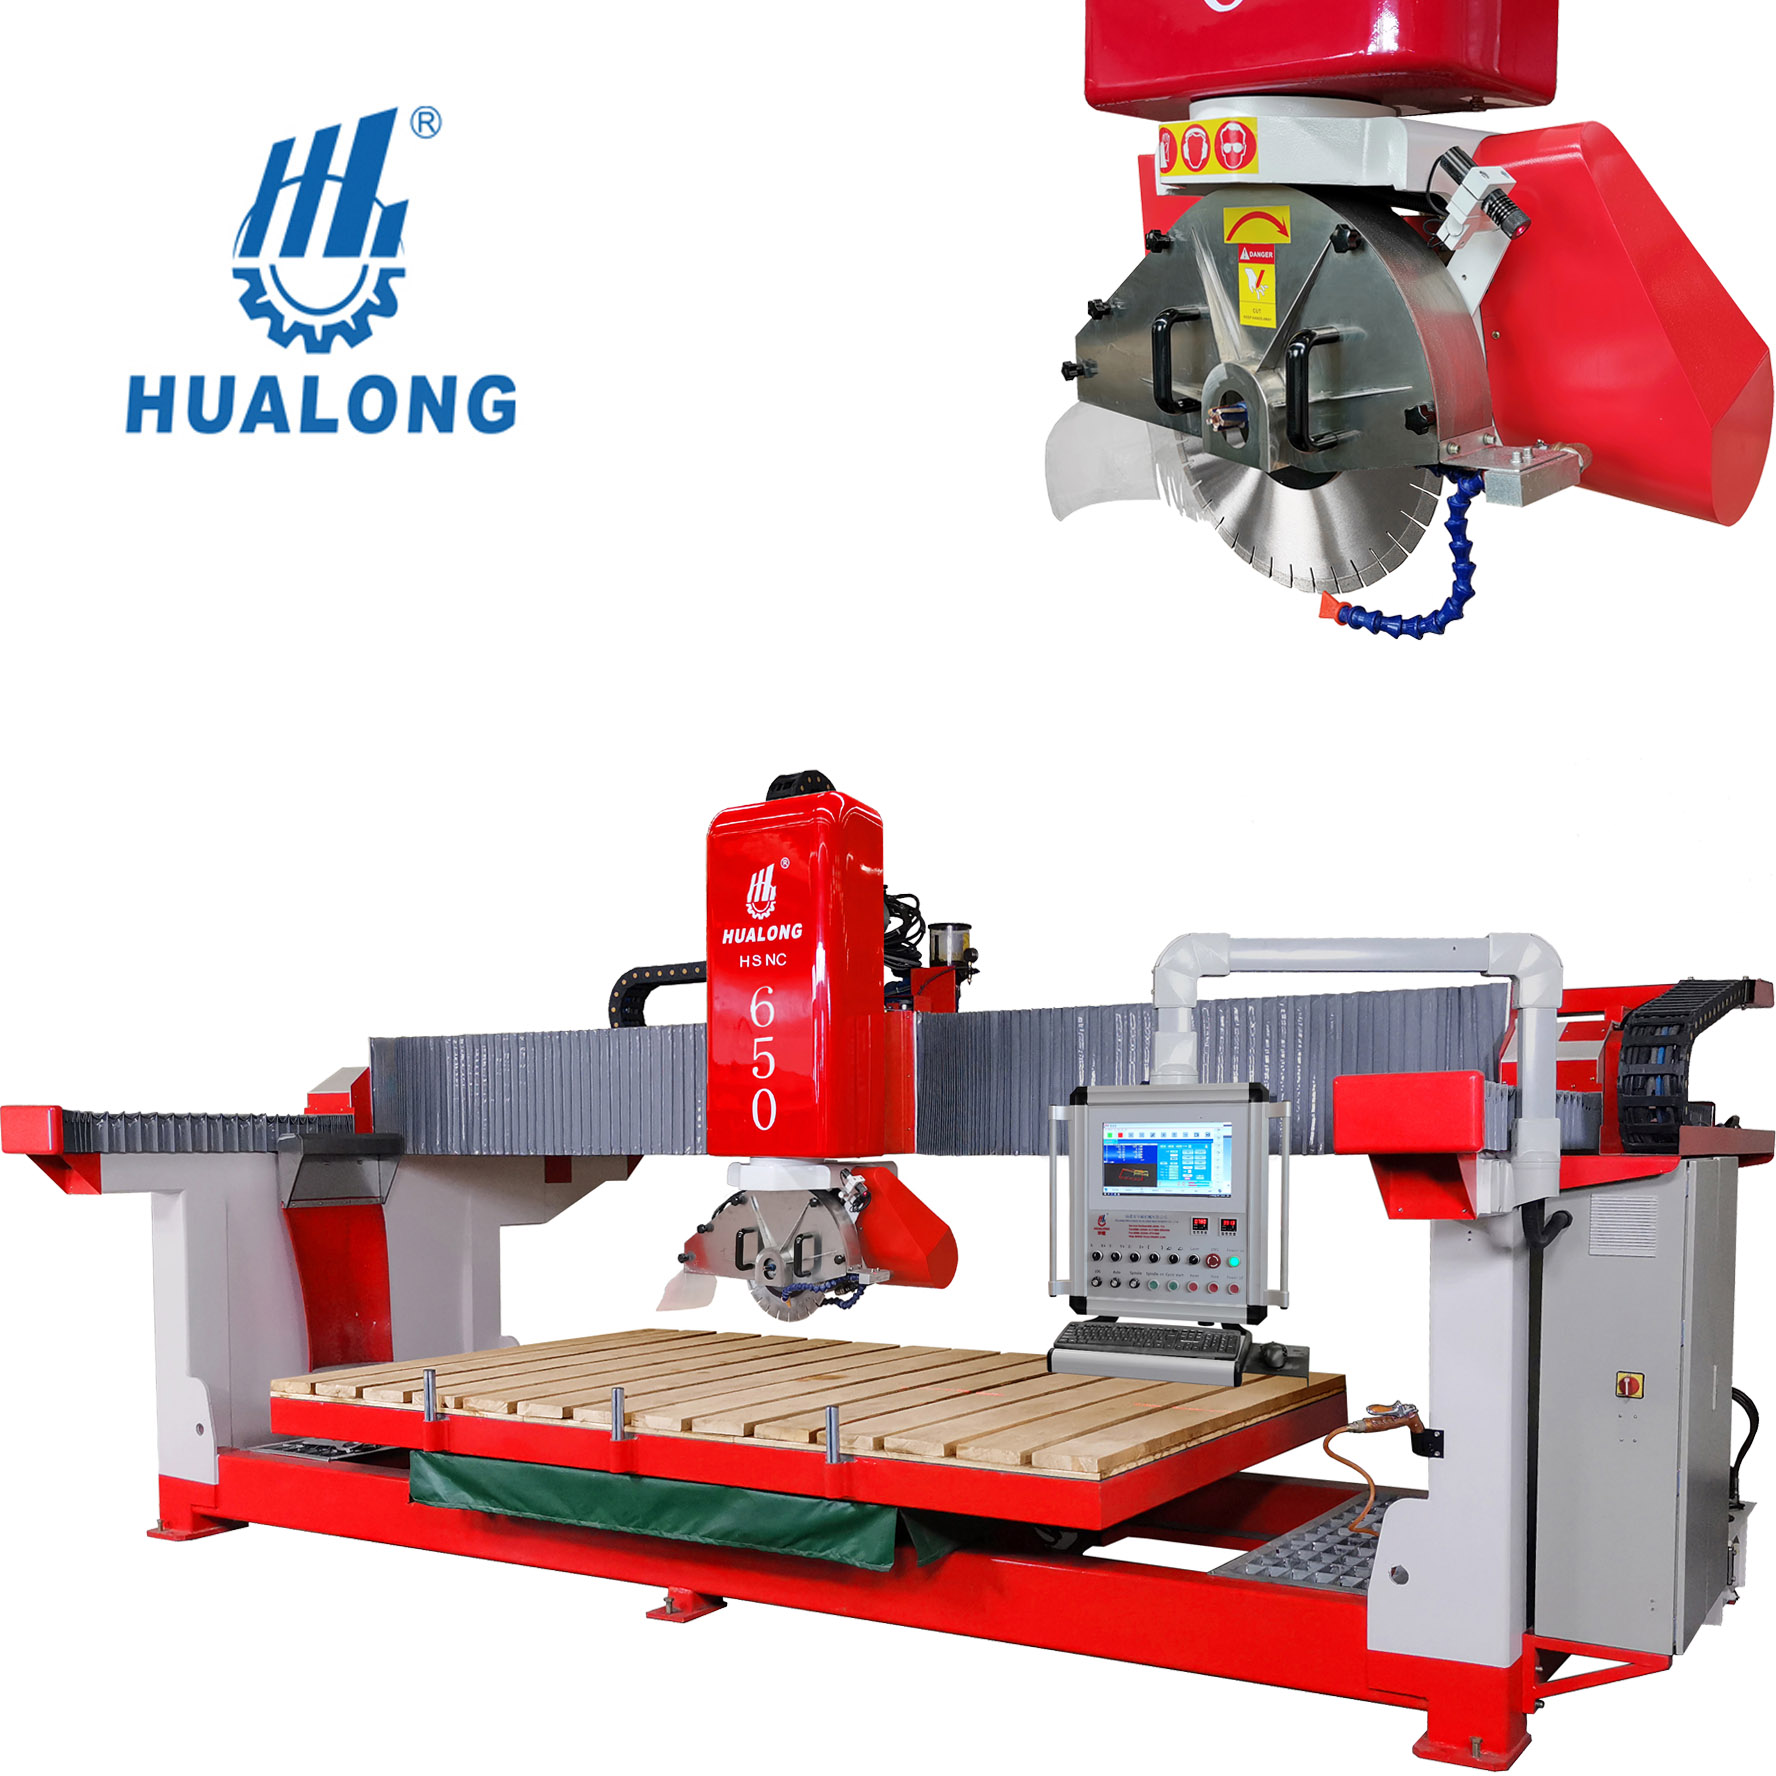 Hualong Stone Cutting Machinery HSNC-650 automatic CNC bridge saw Cutting and milling machine for granite marble Quartz Glass Tile Cutter